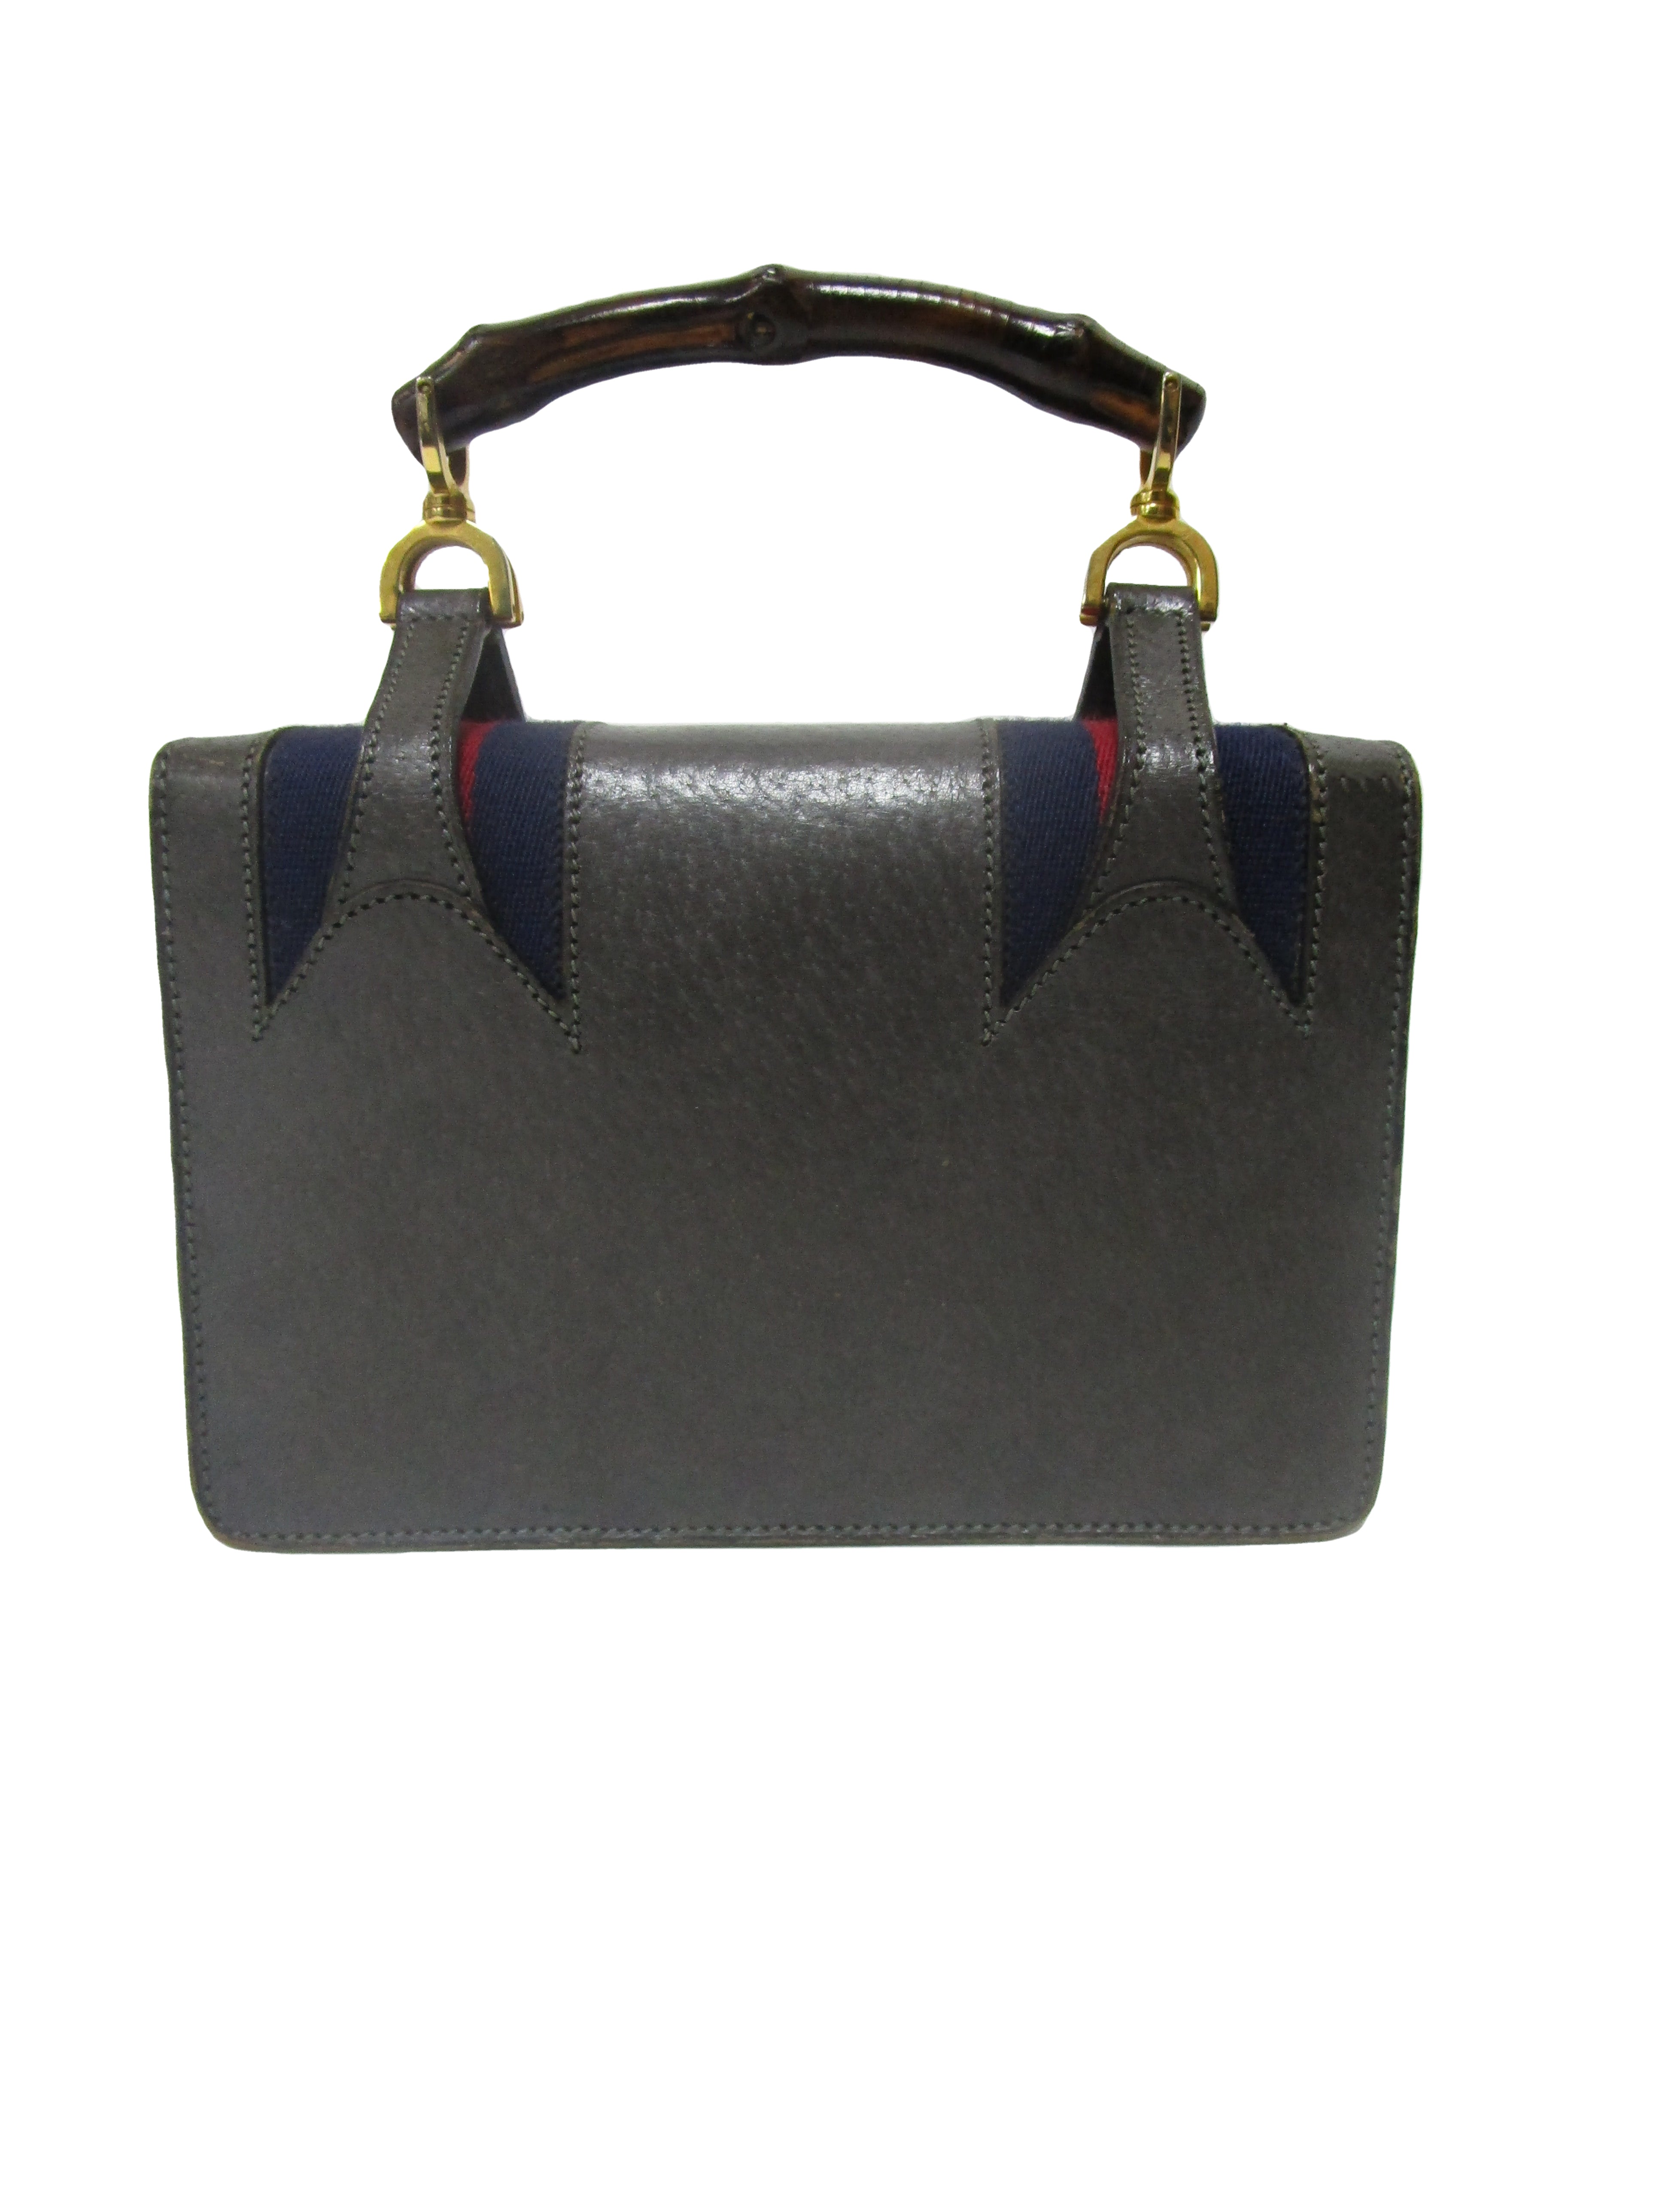 Gucci Luggage Blue Gray Leather Italian Bag, 1970s